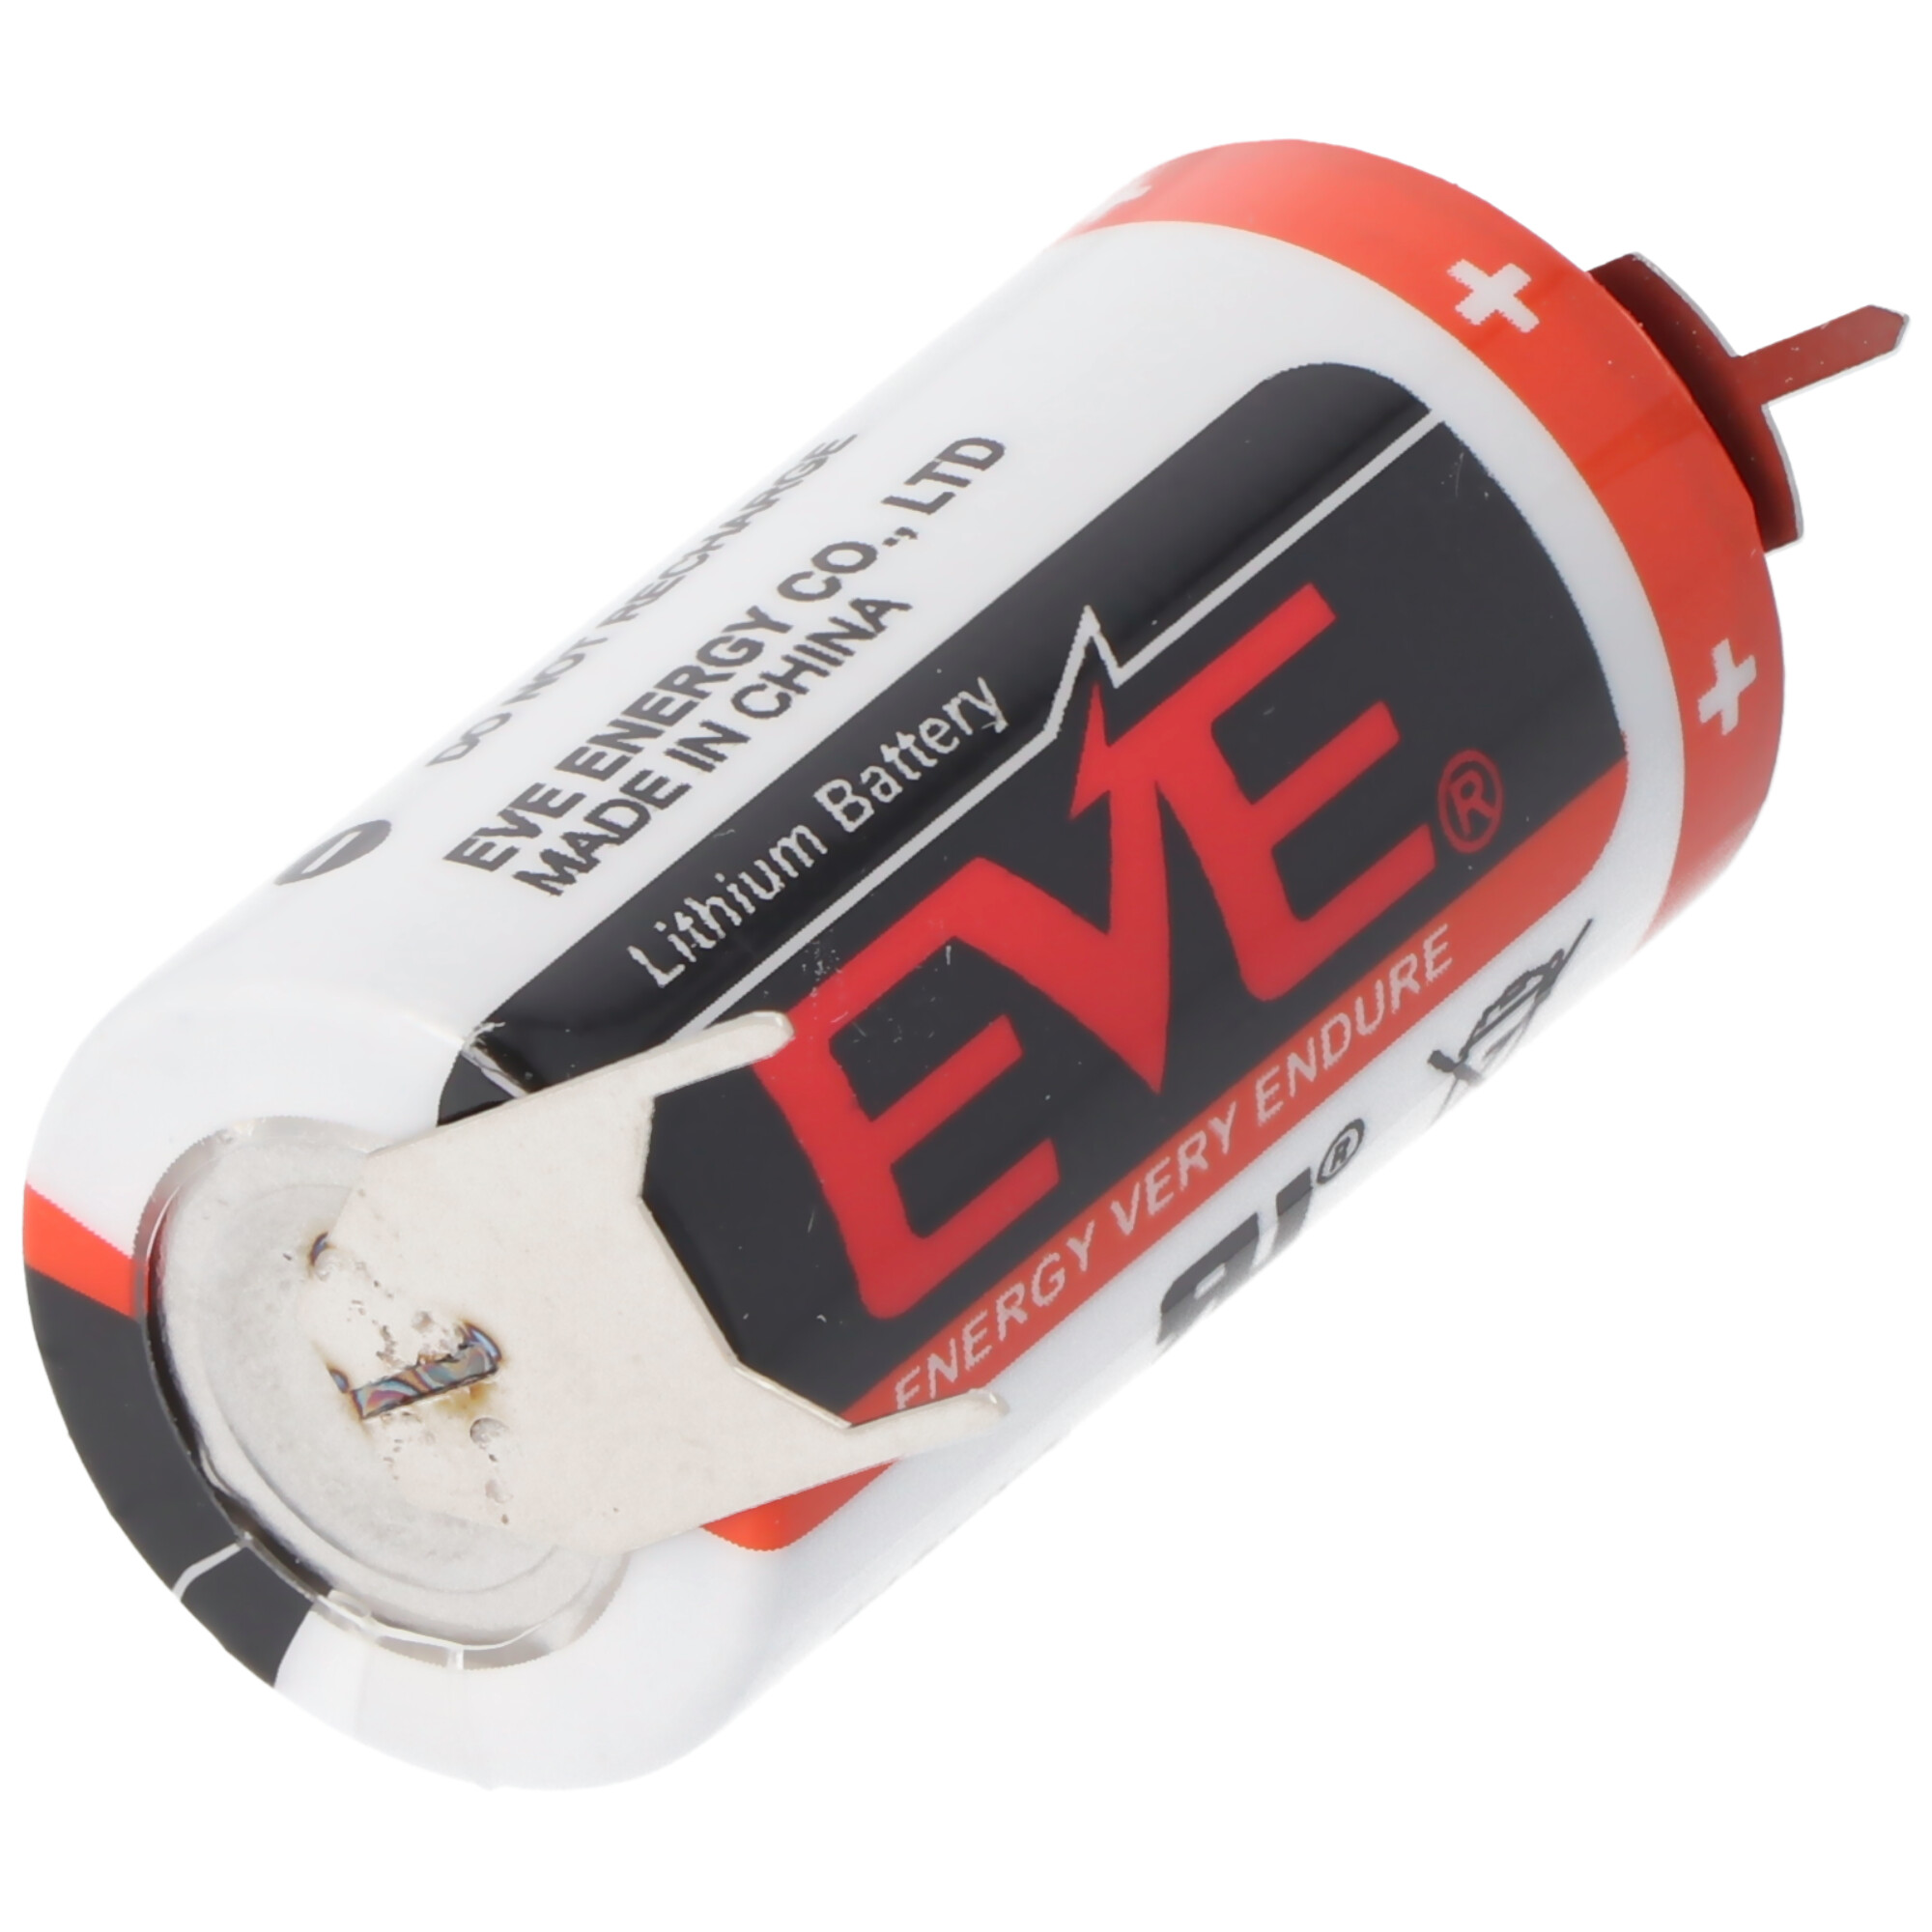 E.V.E CR17335 Batterie Baugröße 2/3A mit 3 Volt Spannung und 1550mAh Kapazität, Abmessungen 33,5 x 17mm, mit Printkontakten +/-- 7,6mm Rastermaß